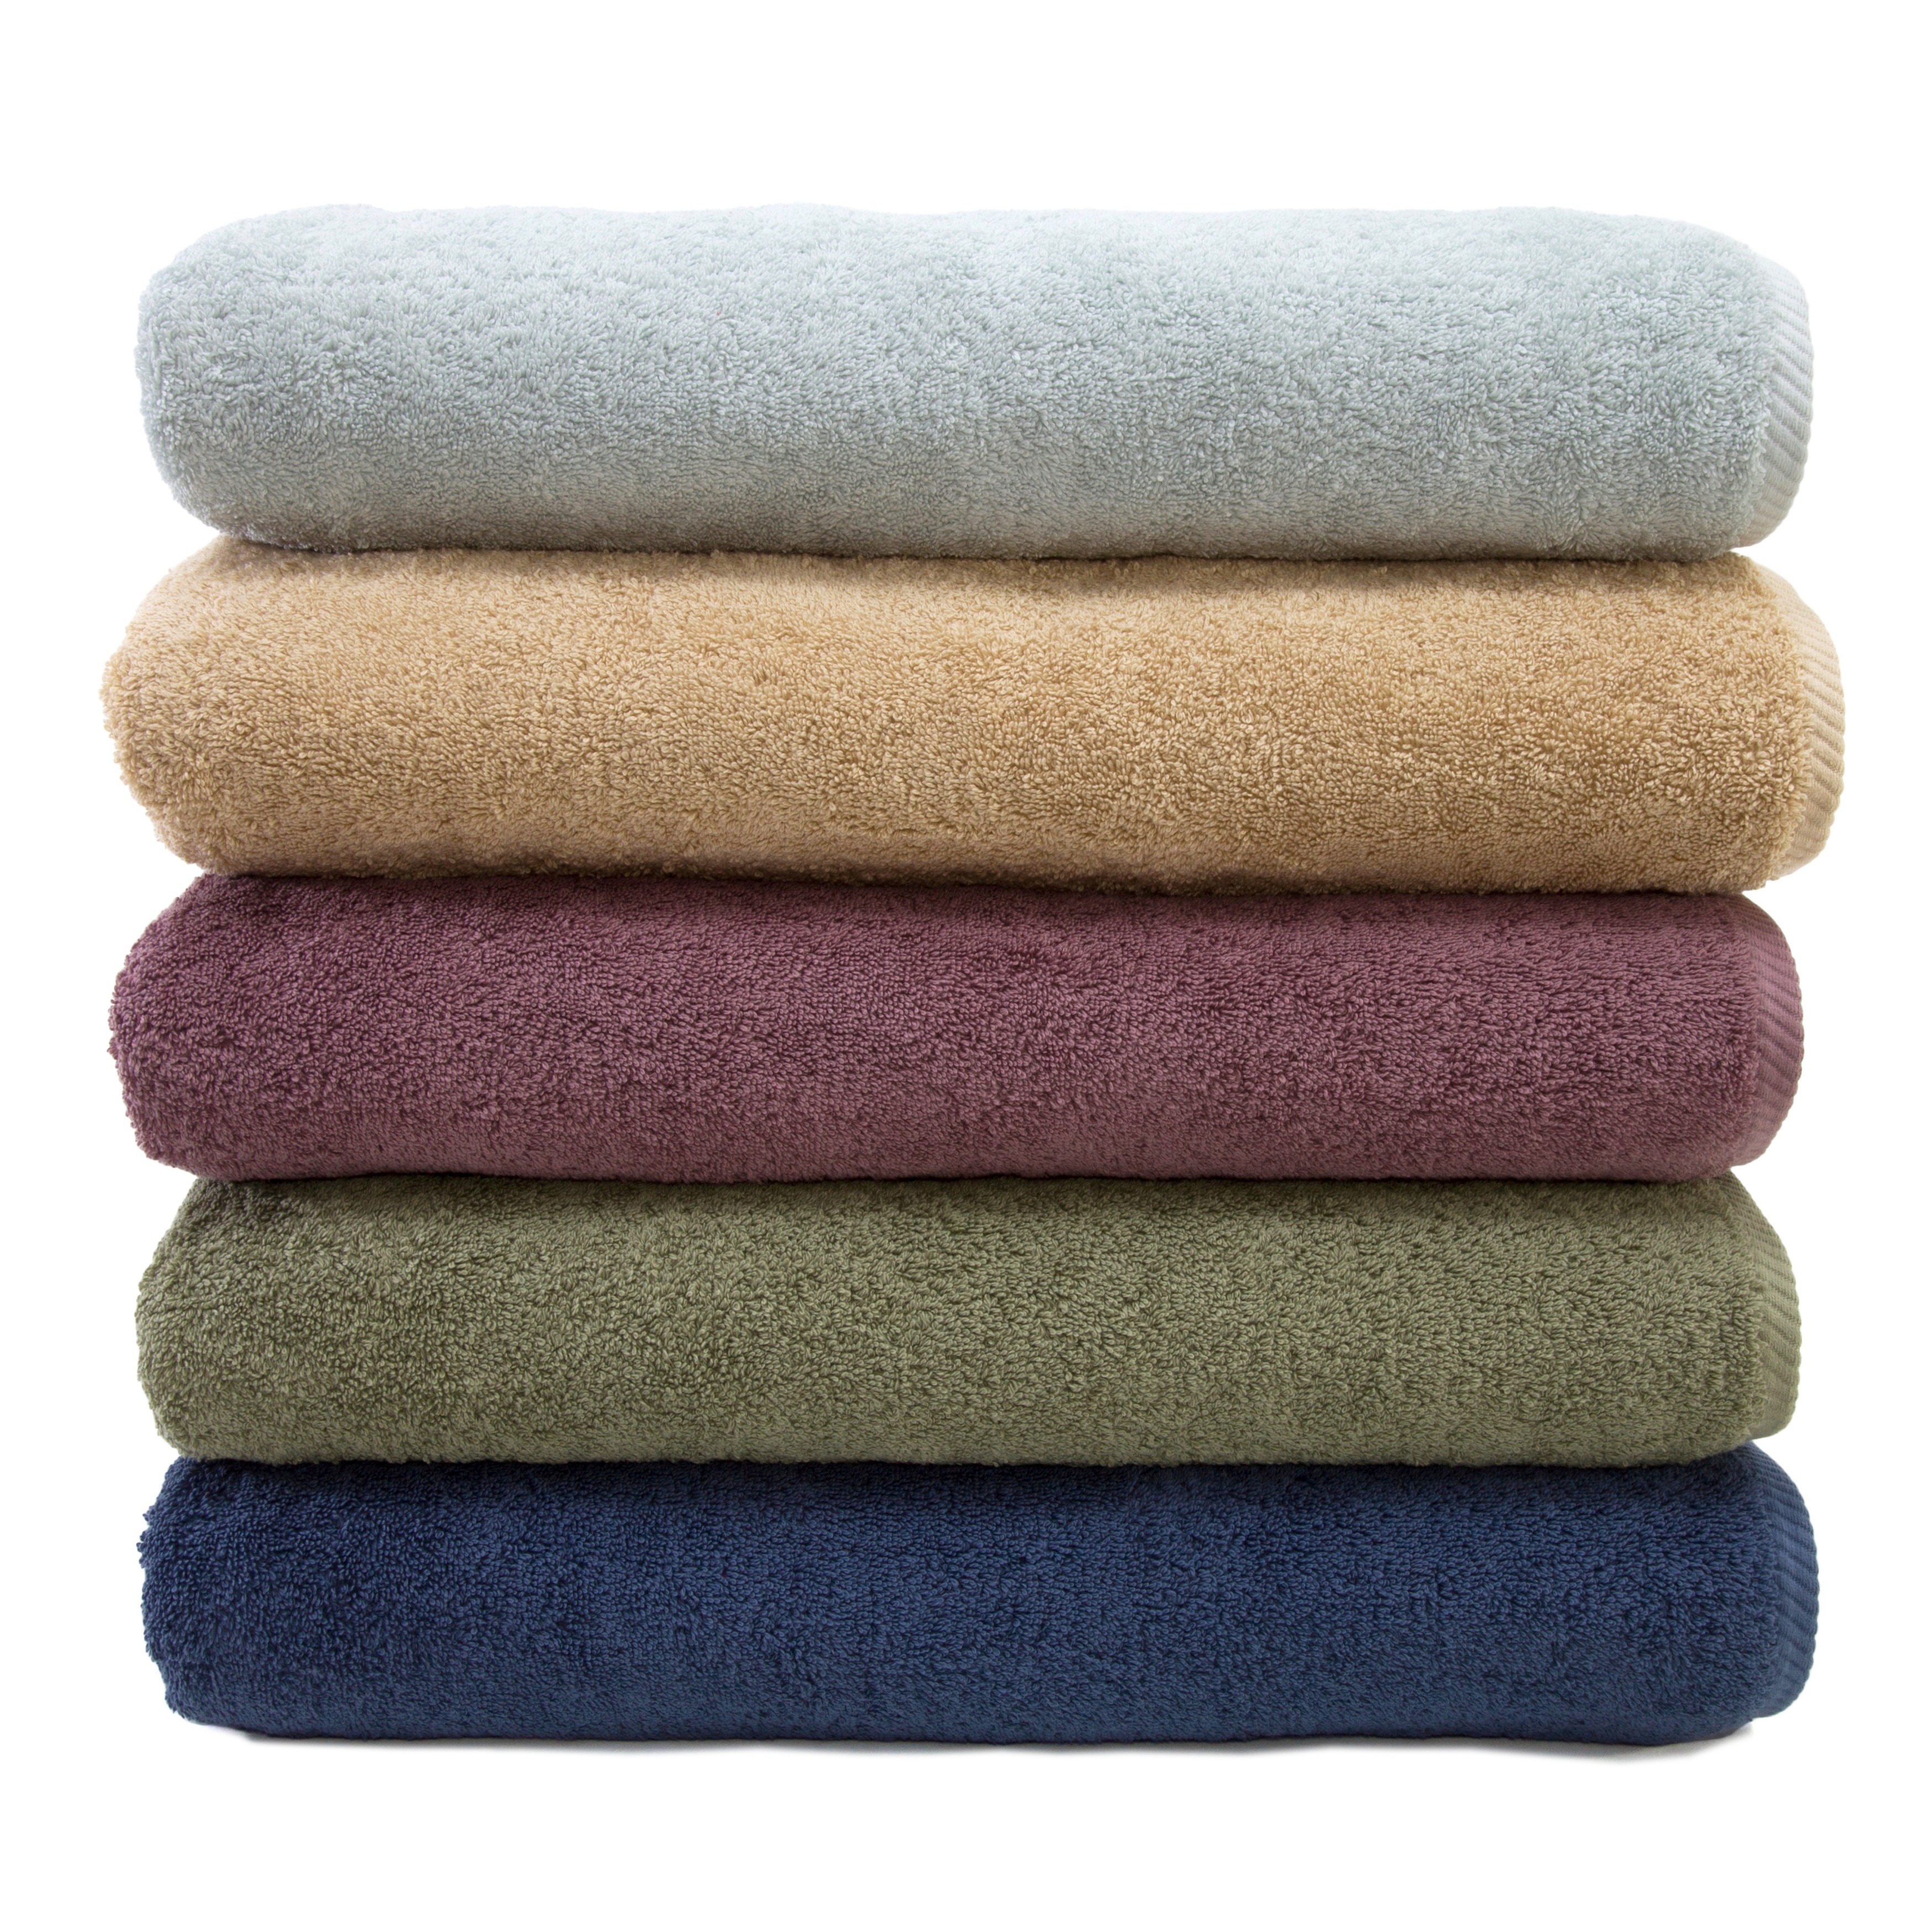 https://ak1.ostkcdn.com/images/products/7594898/Authentic-Hotel-and-Spa-Plush-Soft-Twist-Turkish-Cotton-Bath-Towel-Set-of-2-86622436-4206-429d-9dc0-71f24ec52184.jpg